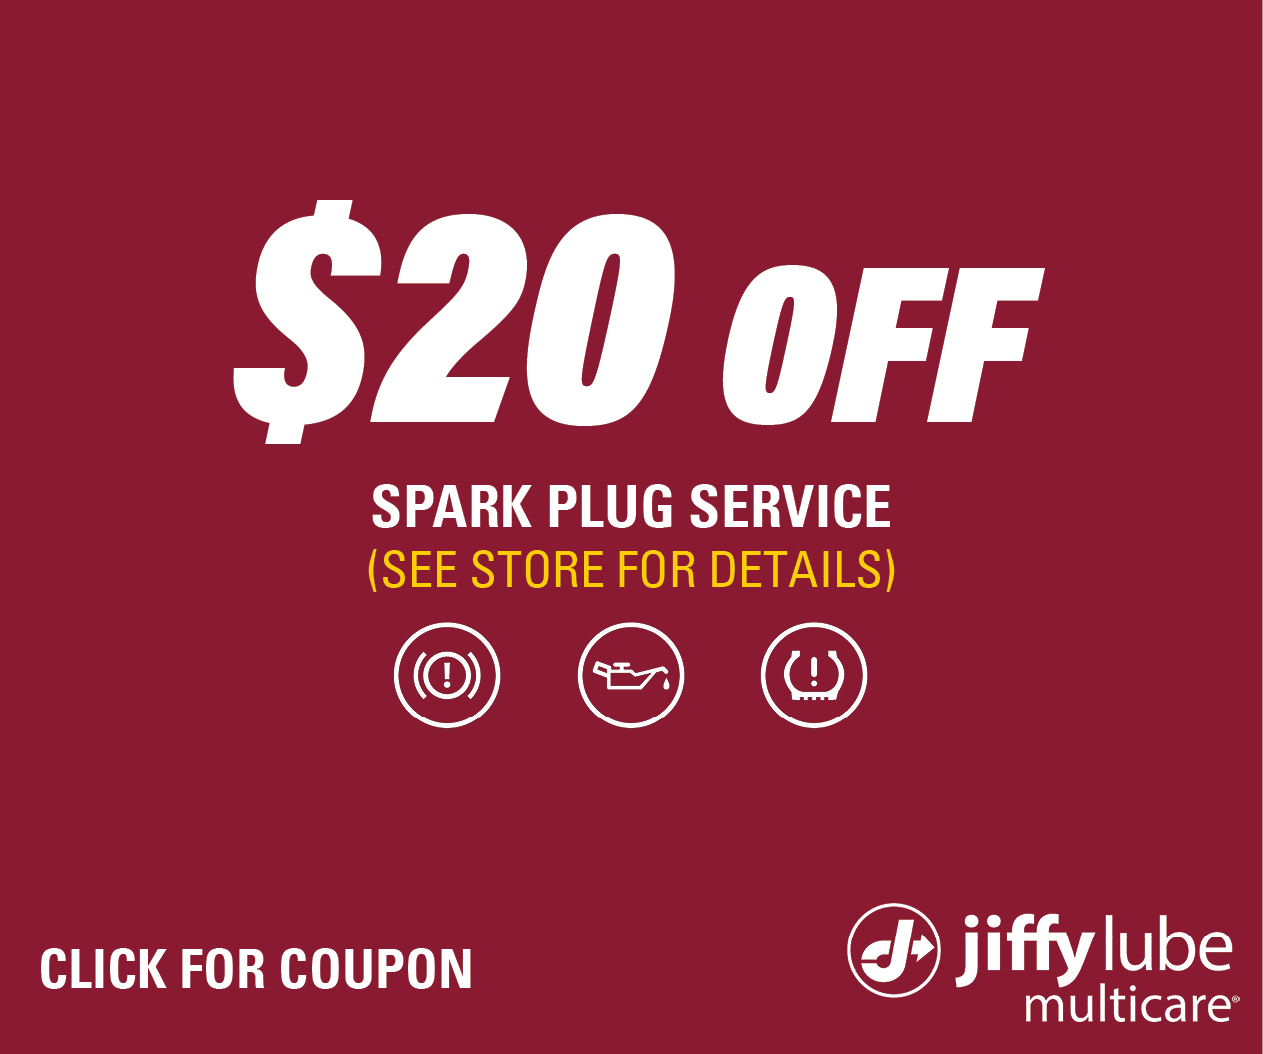 $20 OFF Spark Plug Service Website Image (Bronco Lube)